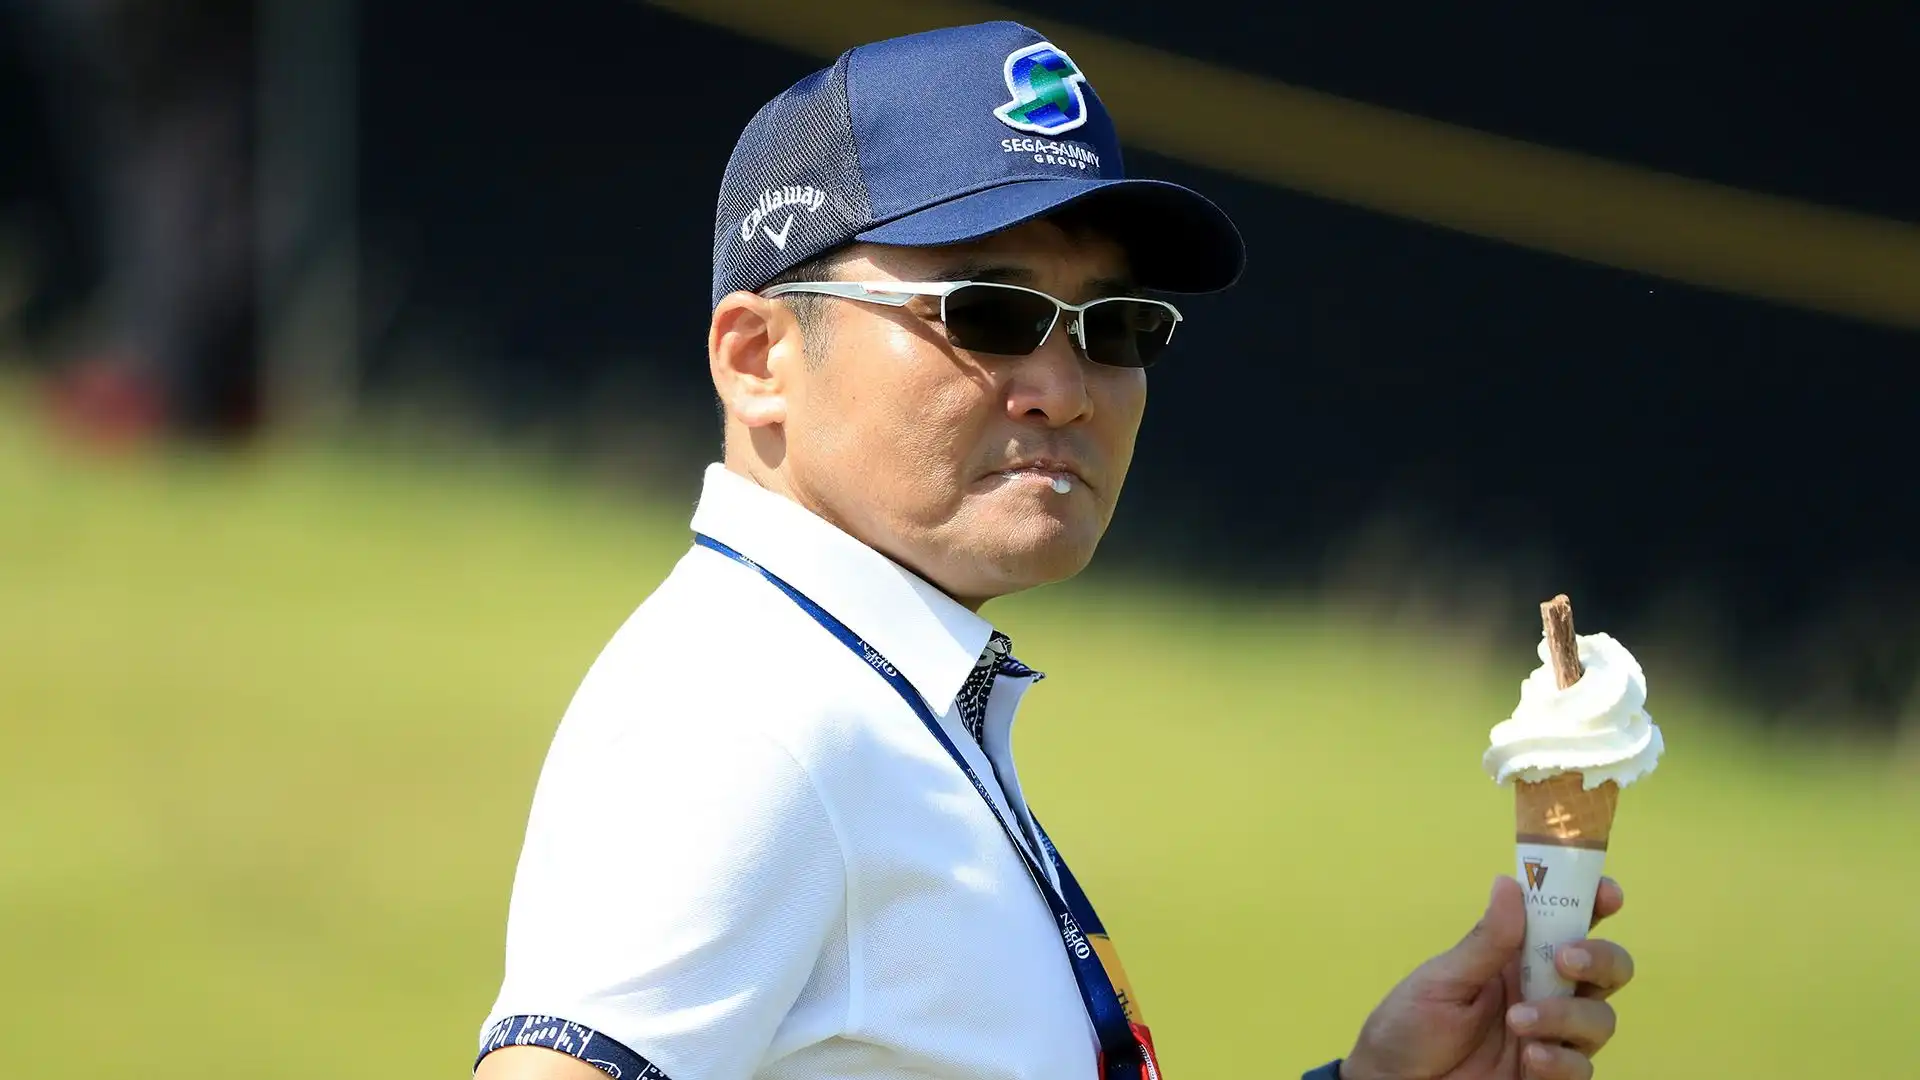 Shigeki Maruyama: premi vinti nel PGA Tour $13,809,170. Ha vinto tre titoli PGA in carriera